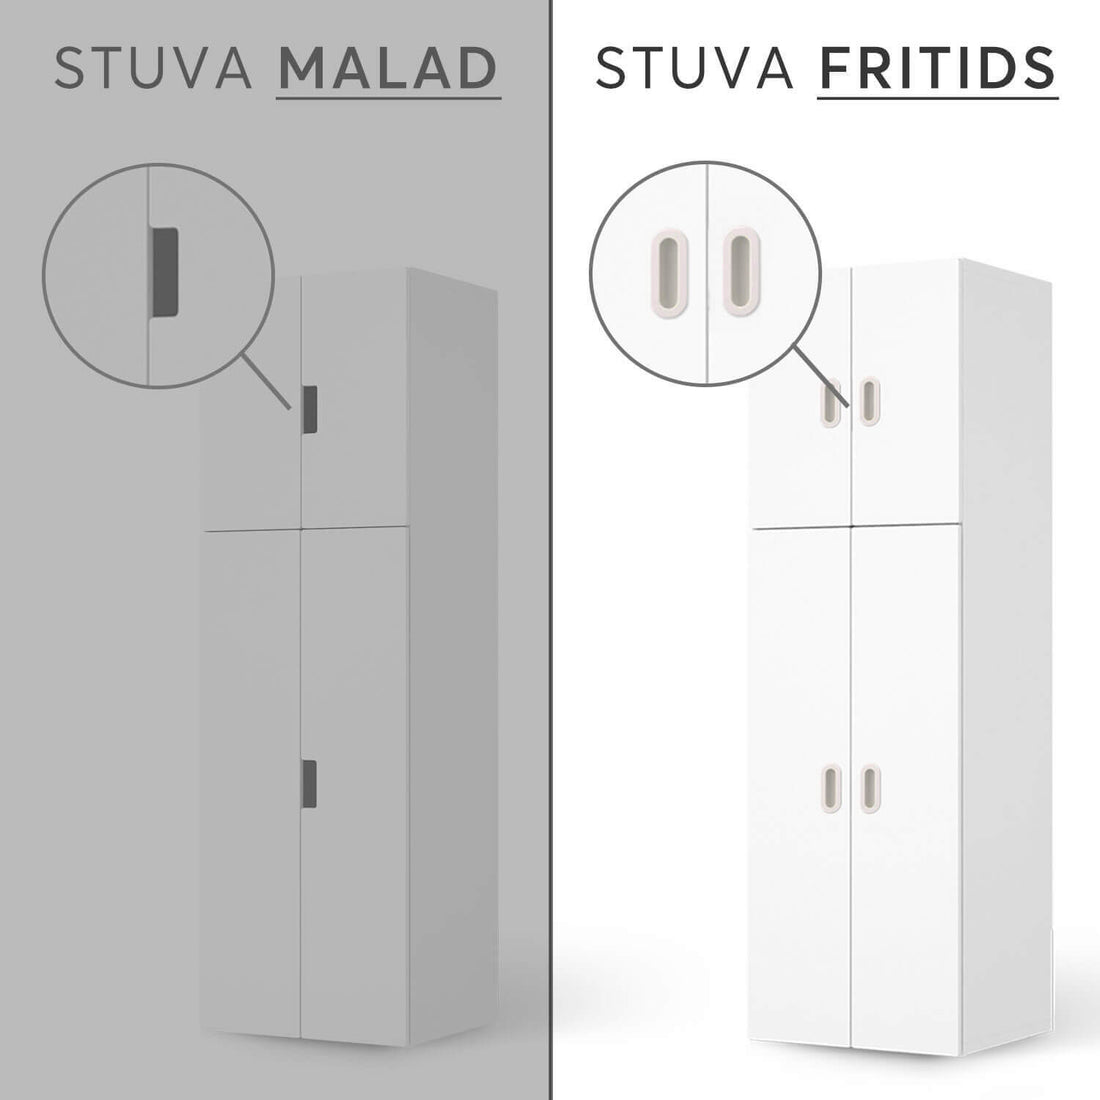 Vergleich IKEA Stuva Fritids / Malad - Hoppel